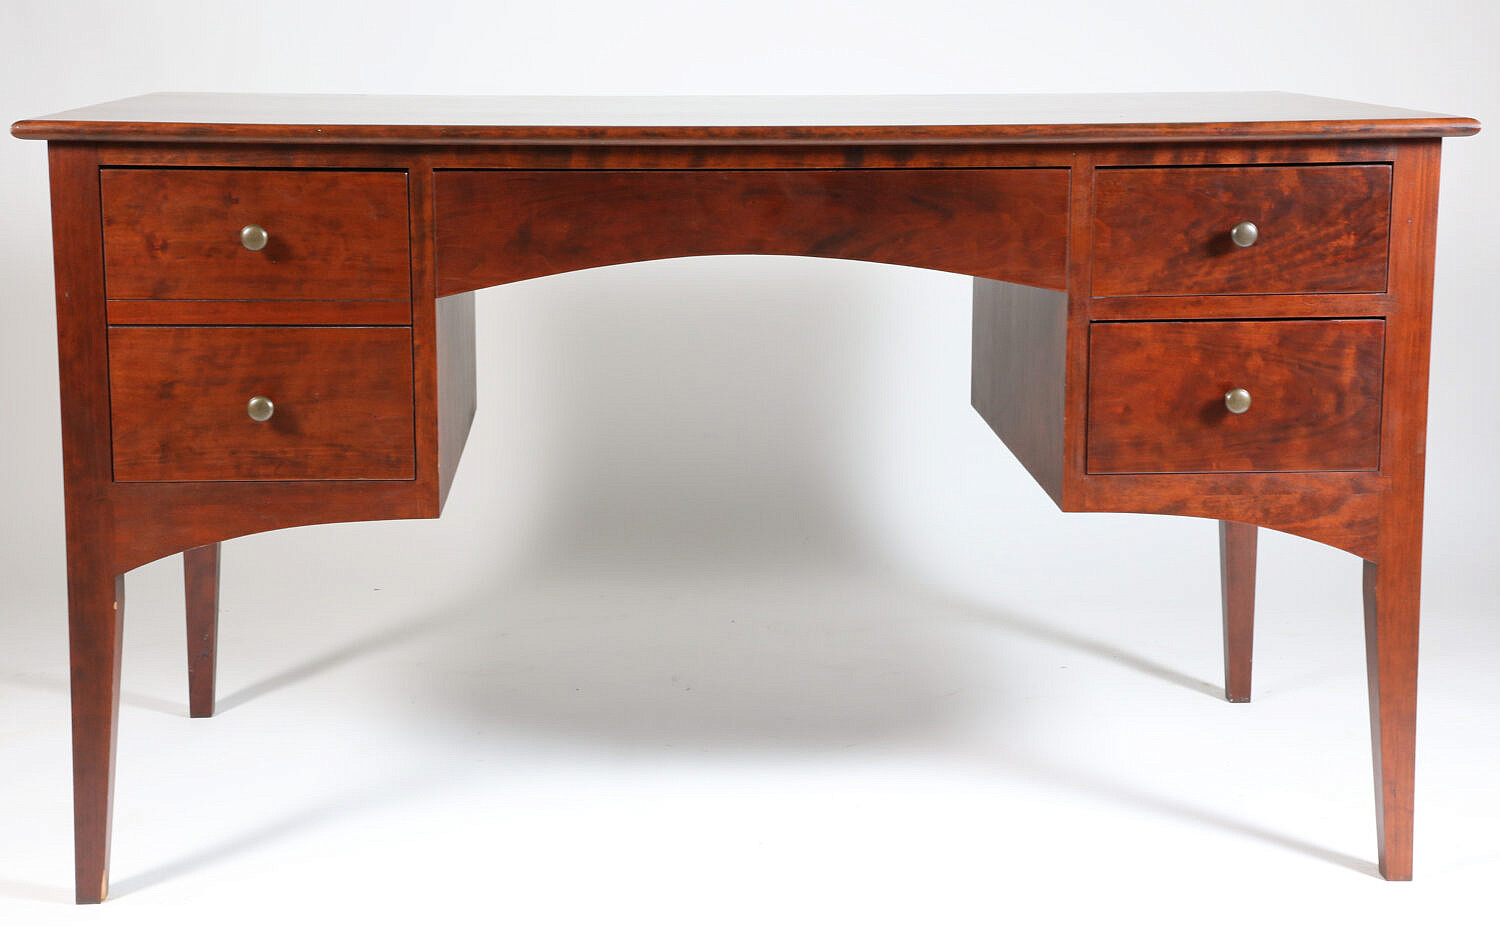 Stephen Swift mahogany five-drawer desk, est. $3,000-$5,000